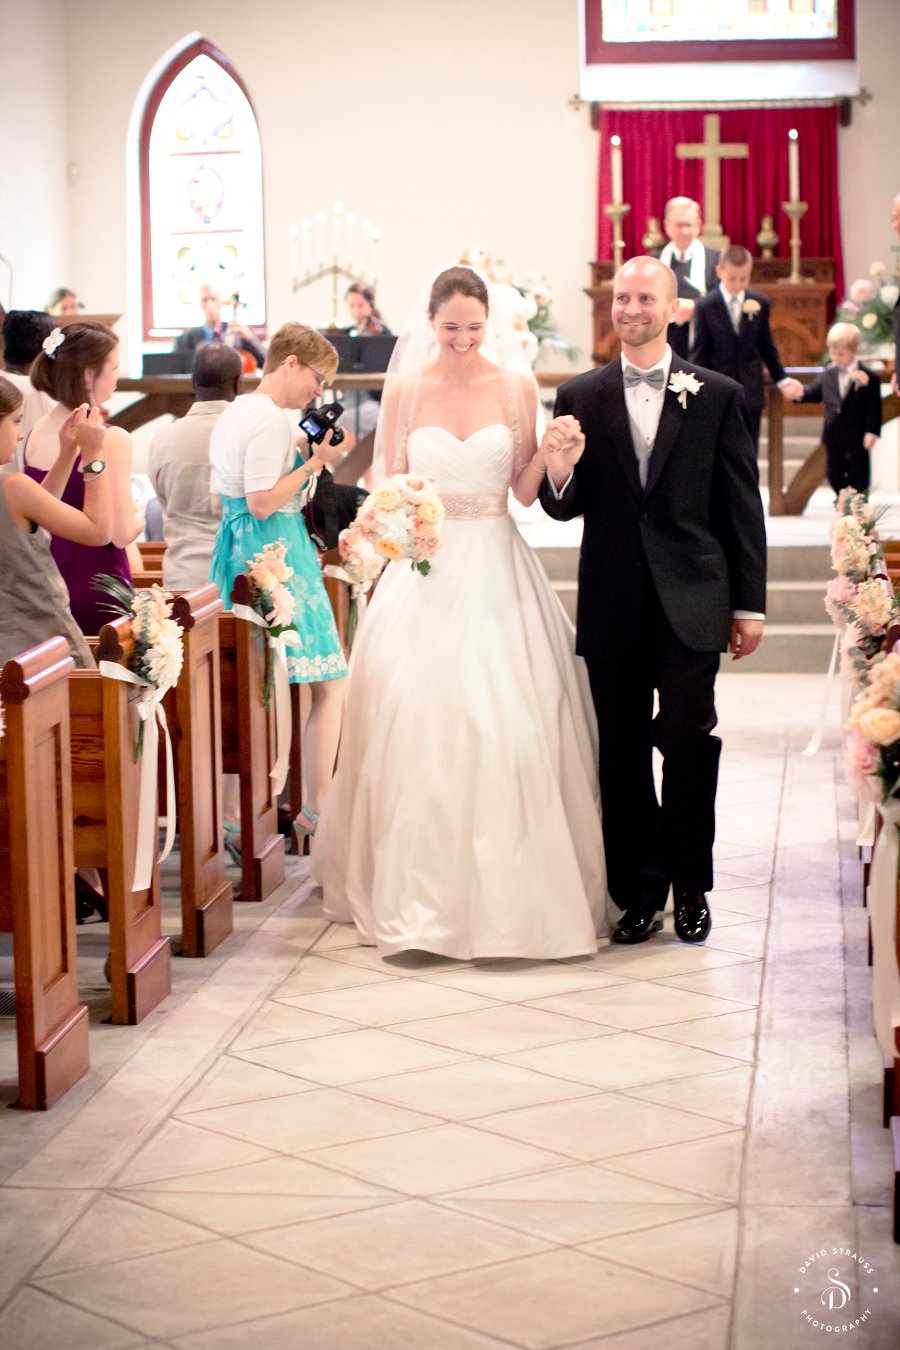 St. Lukes Chapel Wedding Ceremony - McCrady's Reception Venue - David Strauss Photography -2